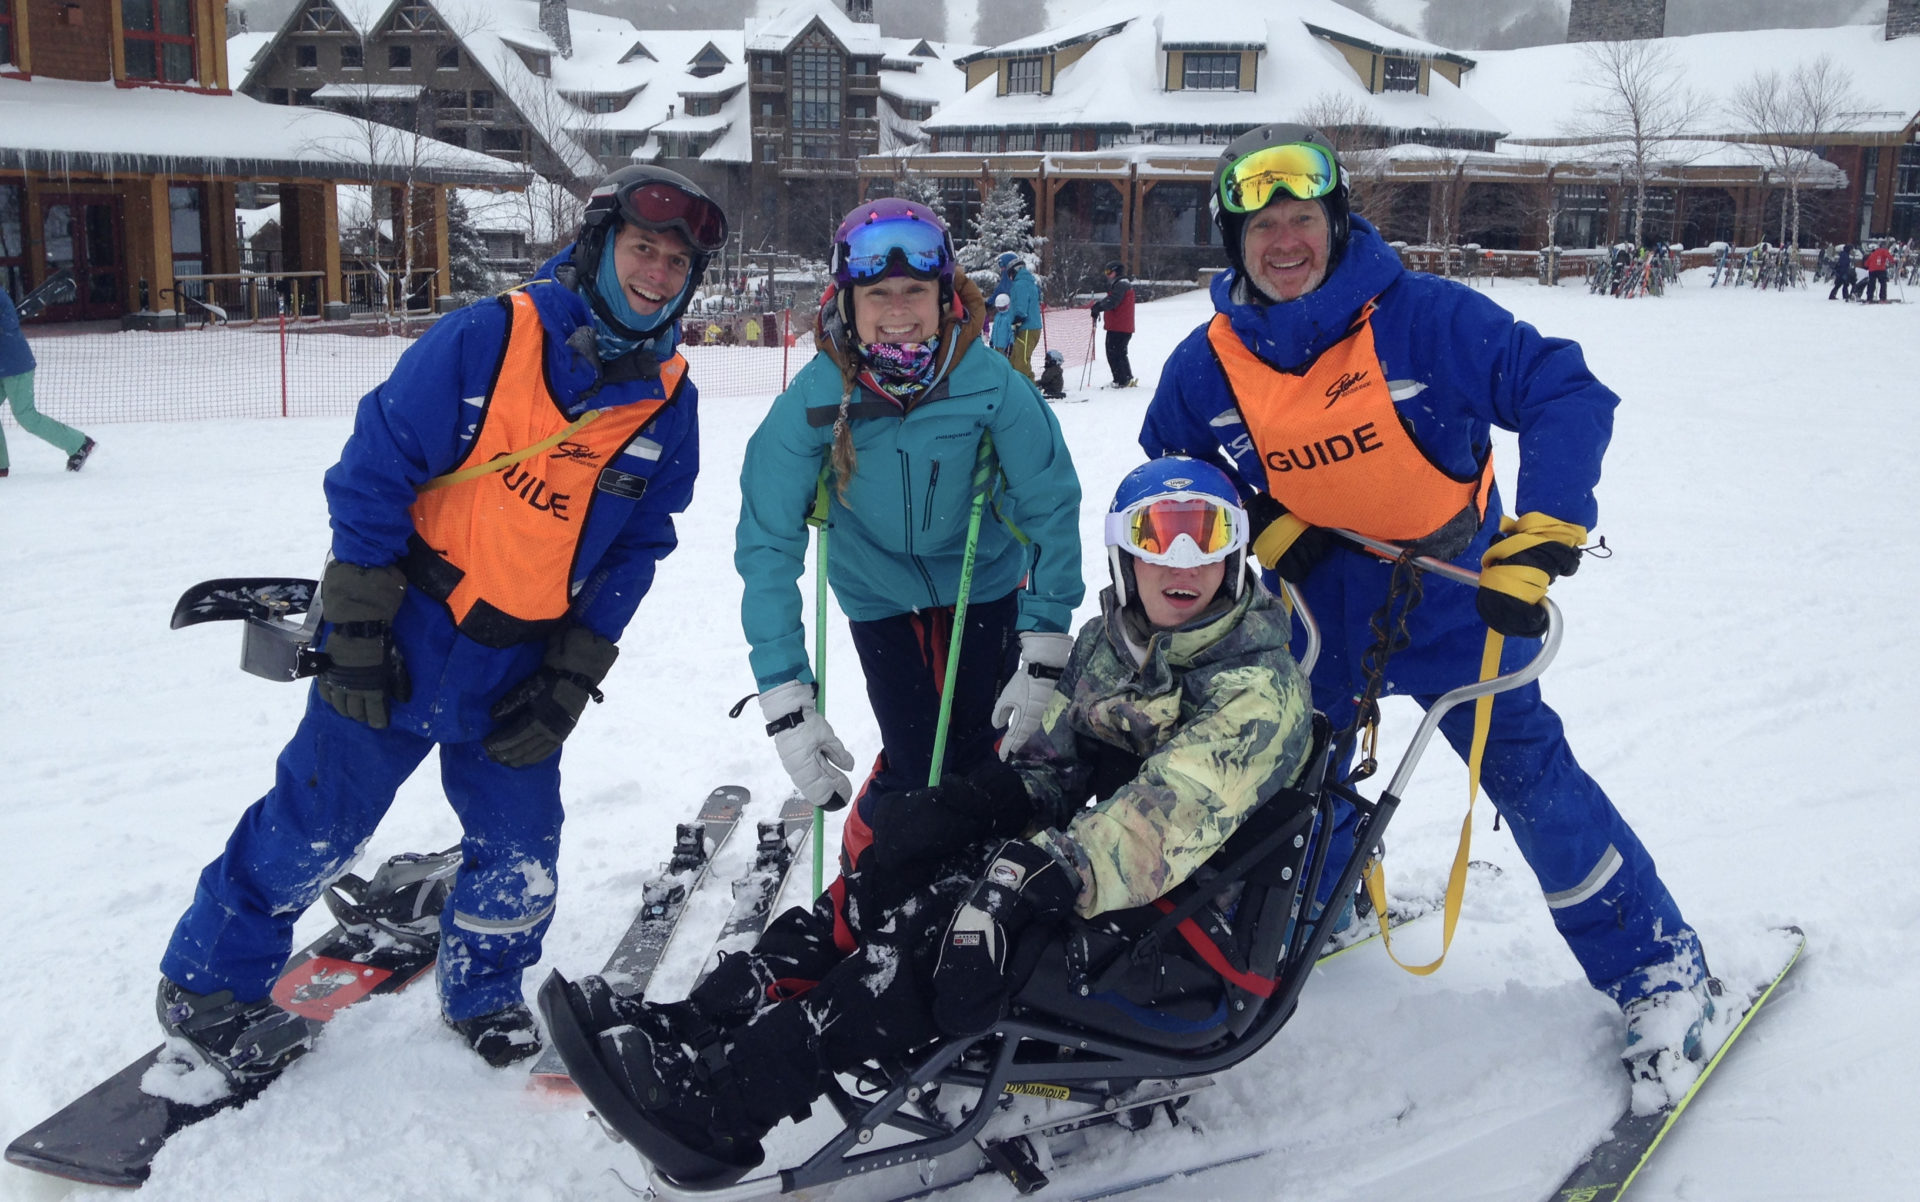 Jack enjoying skiing with GMAS at Stowe